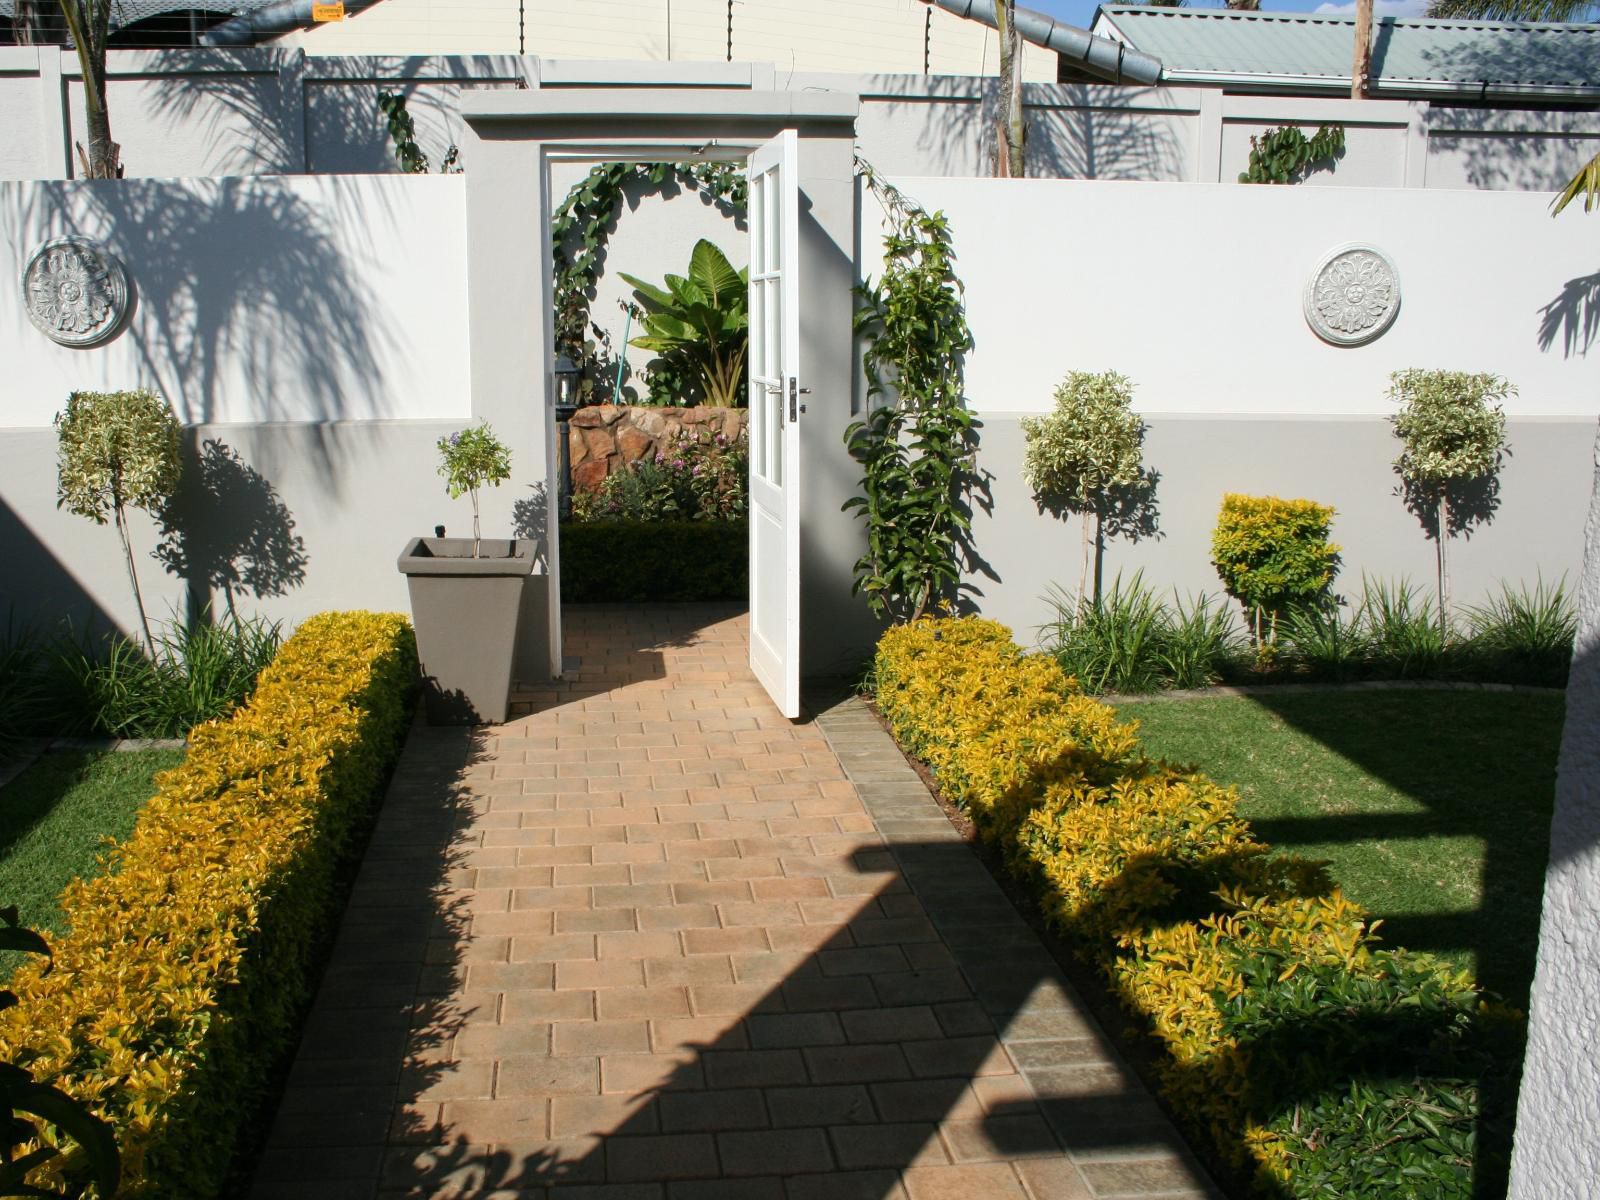 Touch Of Class Villas Baileys Muckleneuk Pretoria Tshwane Gauteng South Africa House, Building, Architecture, Plant, Nature, Garden